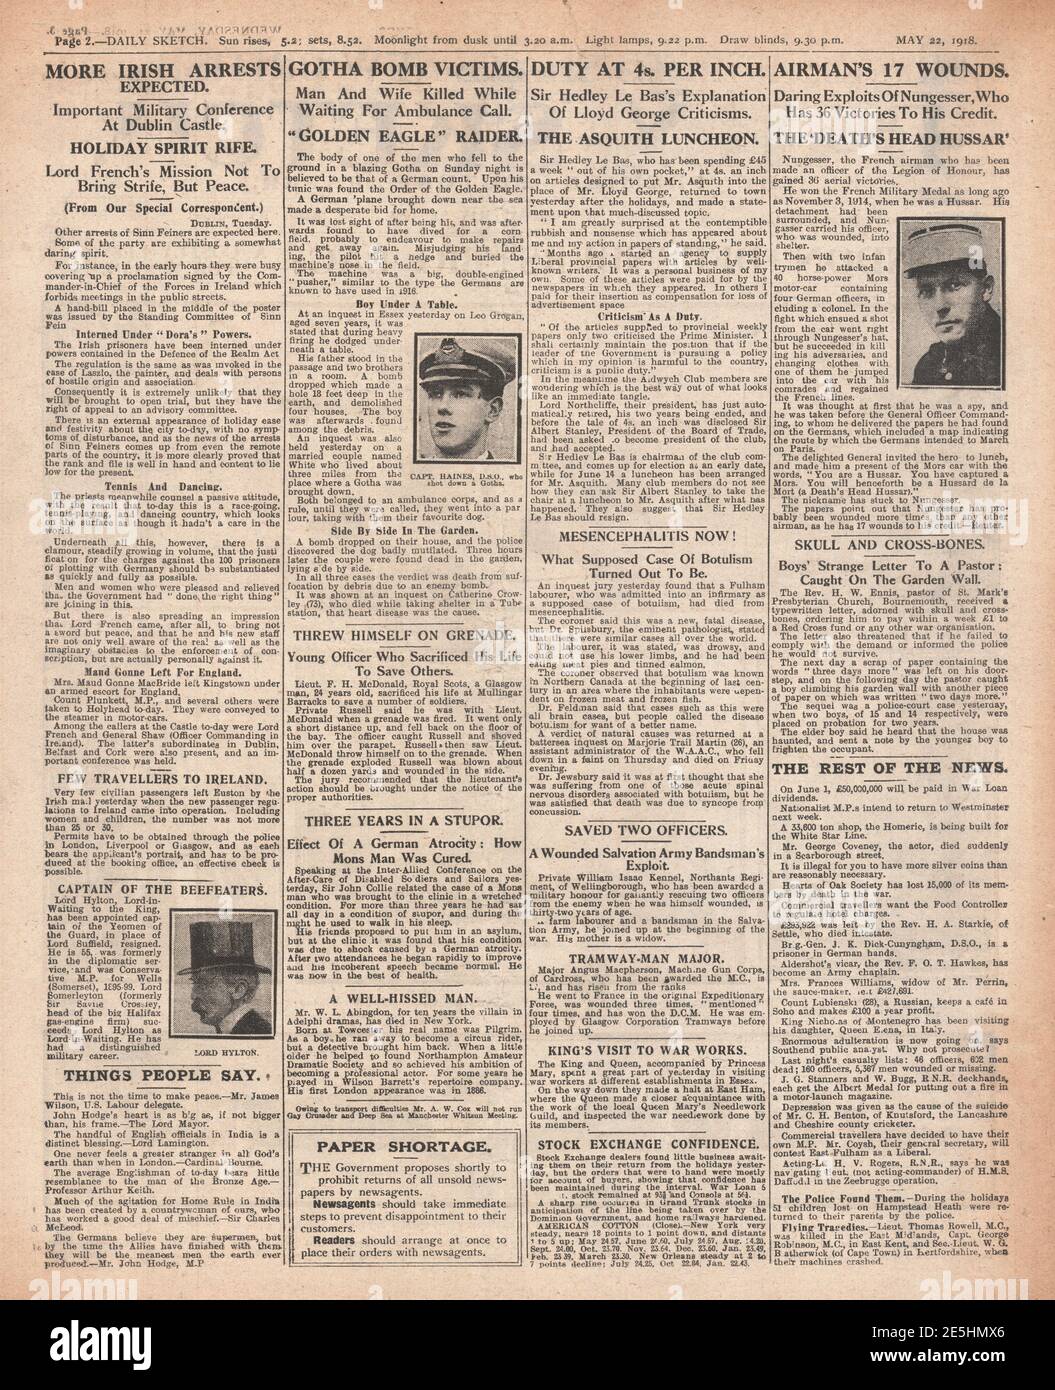 1918 Daily Sketch Gotha raid on London Stock Photo